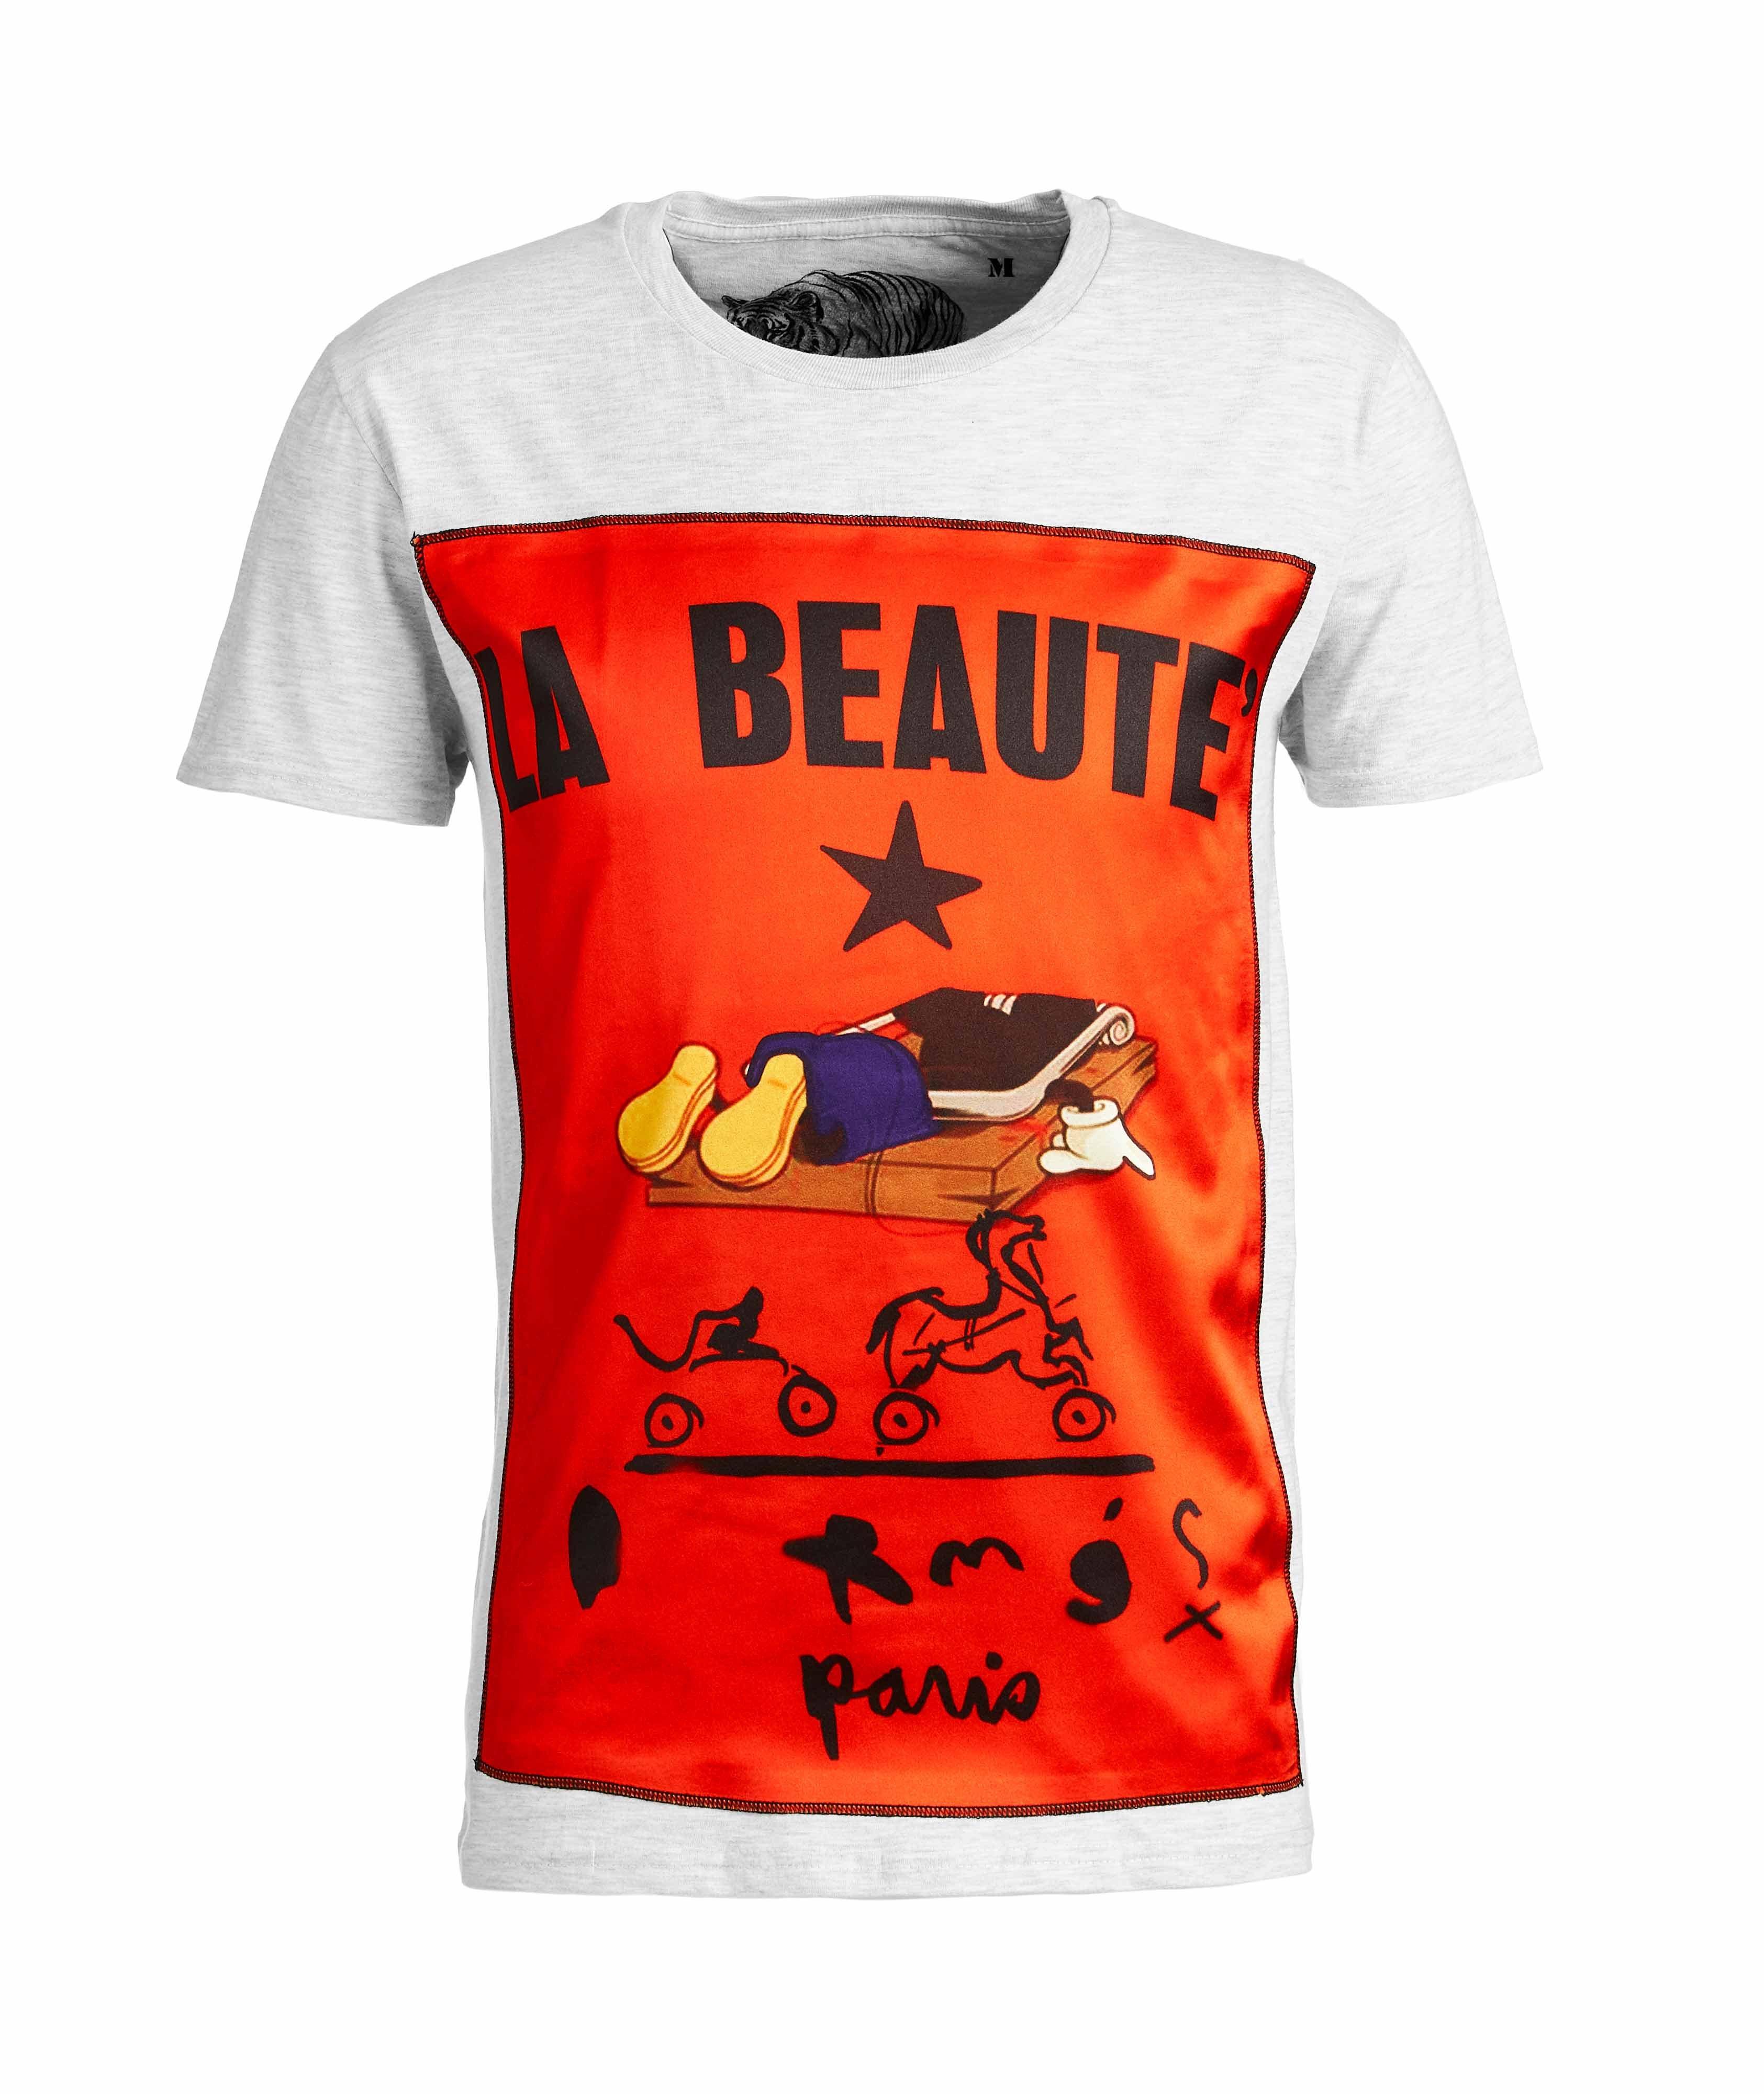 BEAUTE’ T-Shirt image 0